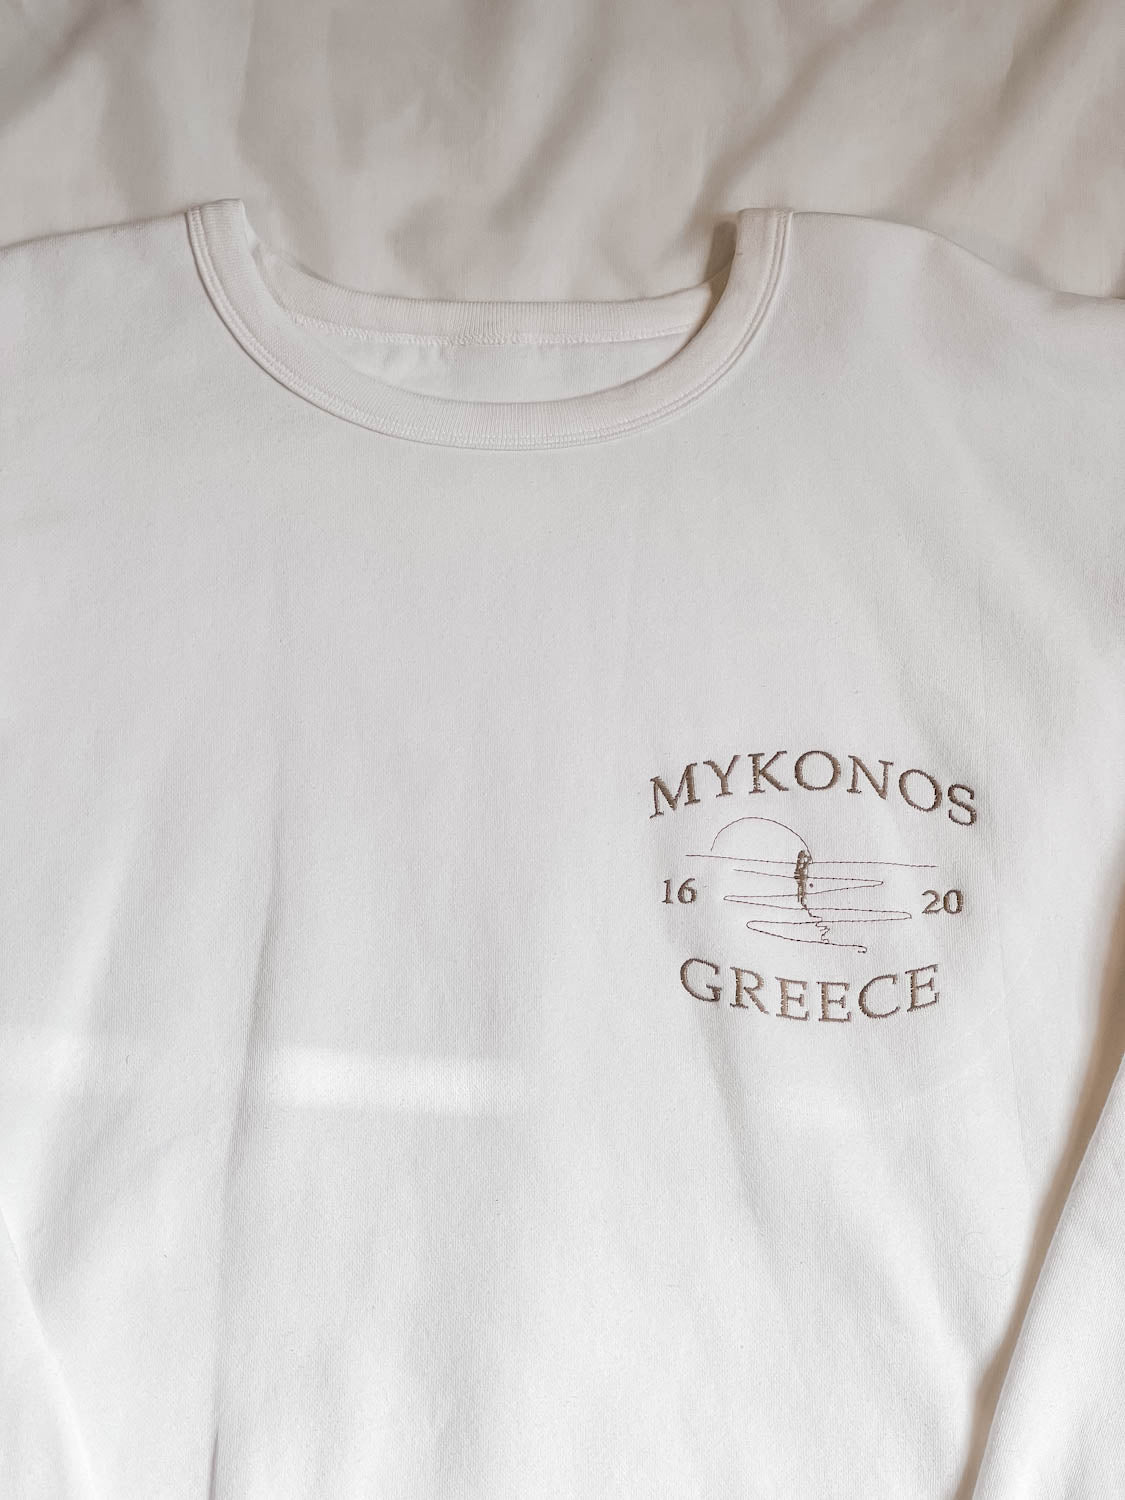 IMPERFECT - Mykonos Embroidered White Sweatshirt Large